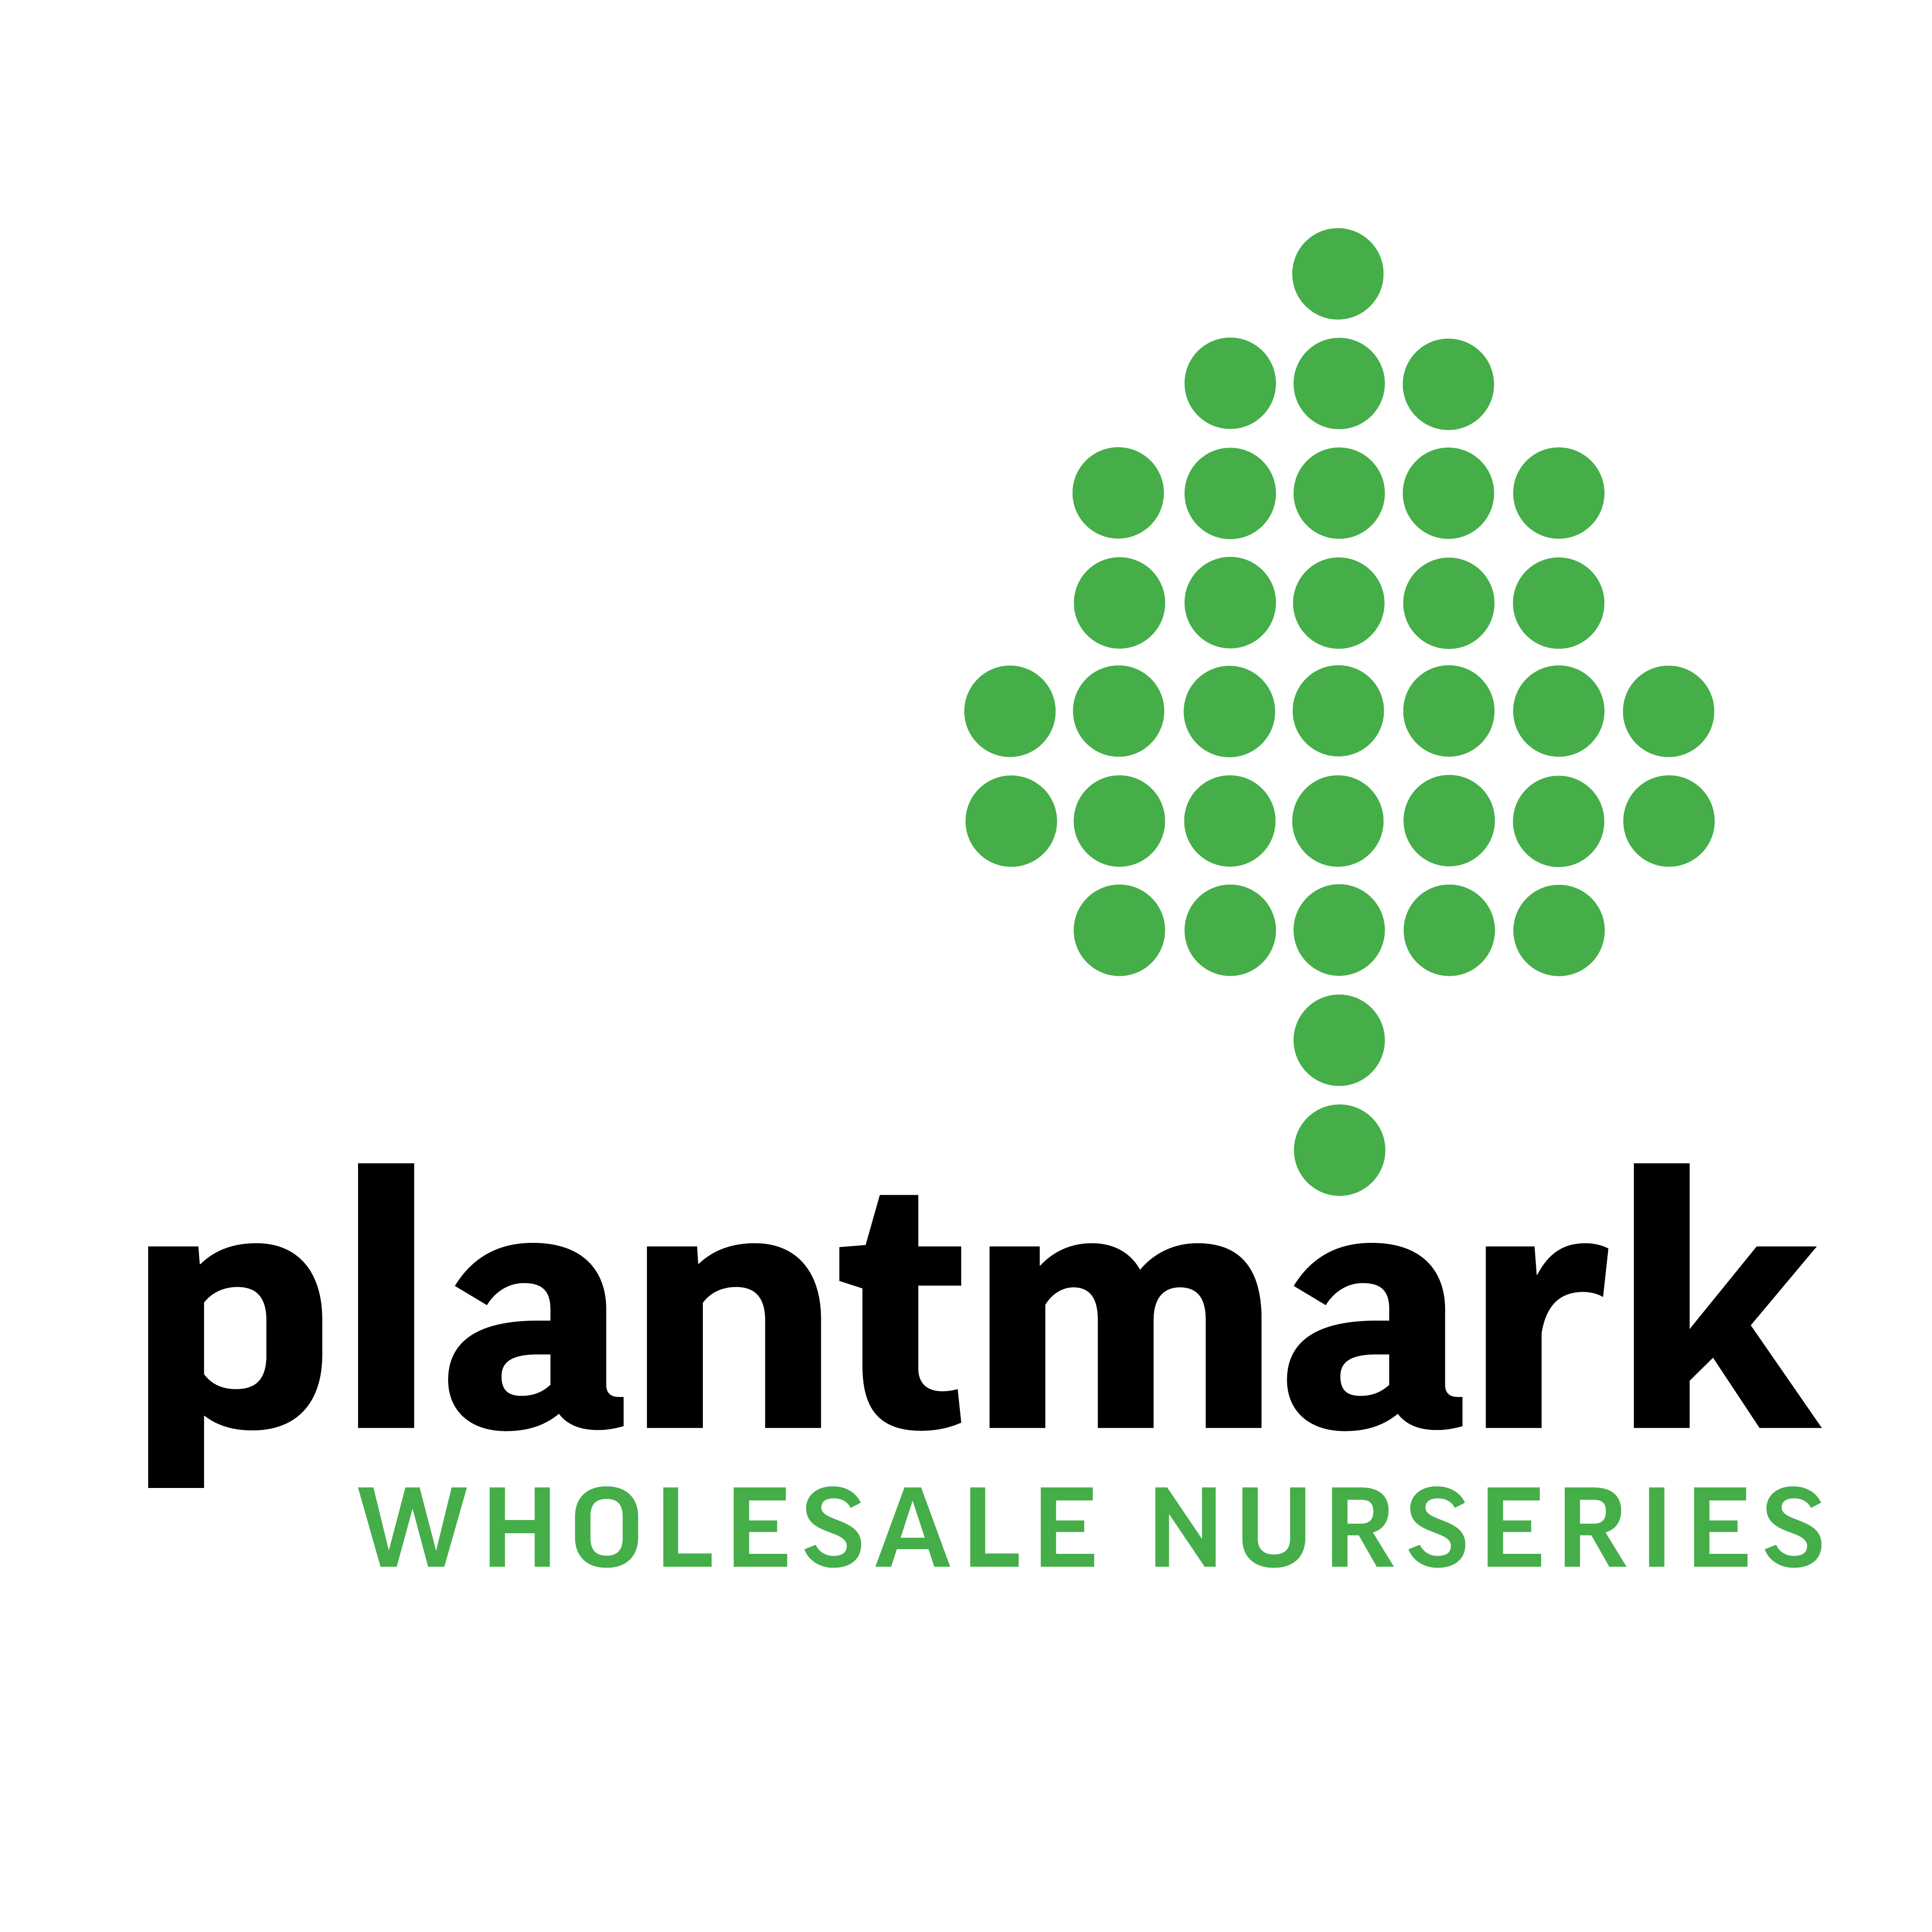 Plantmark Langwarrin (03) 8787 4133